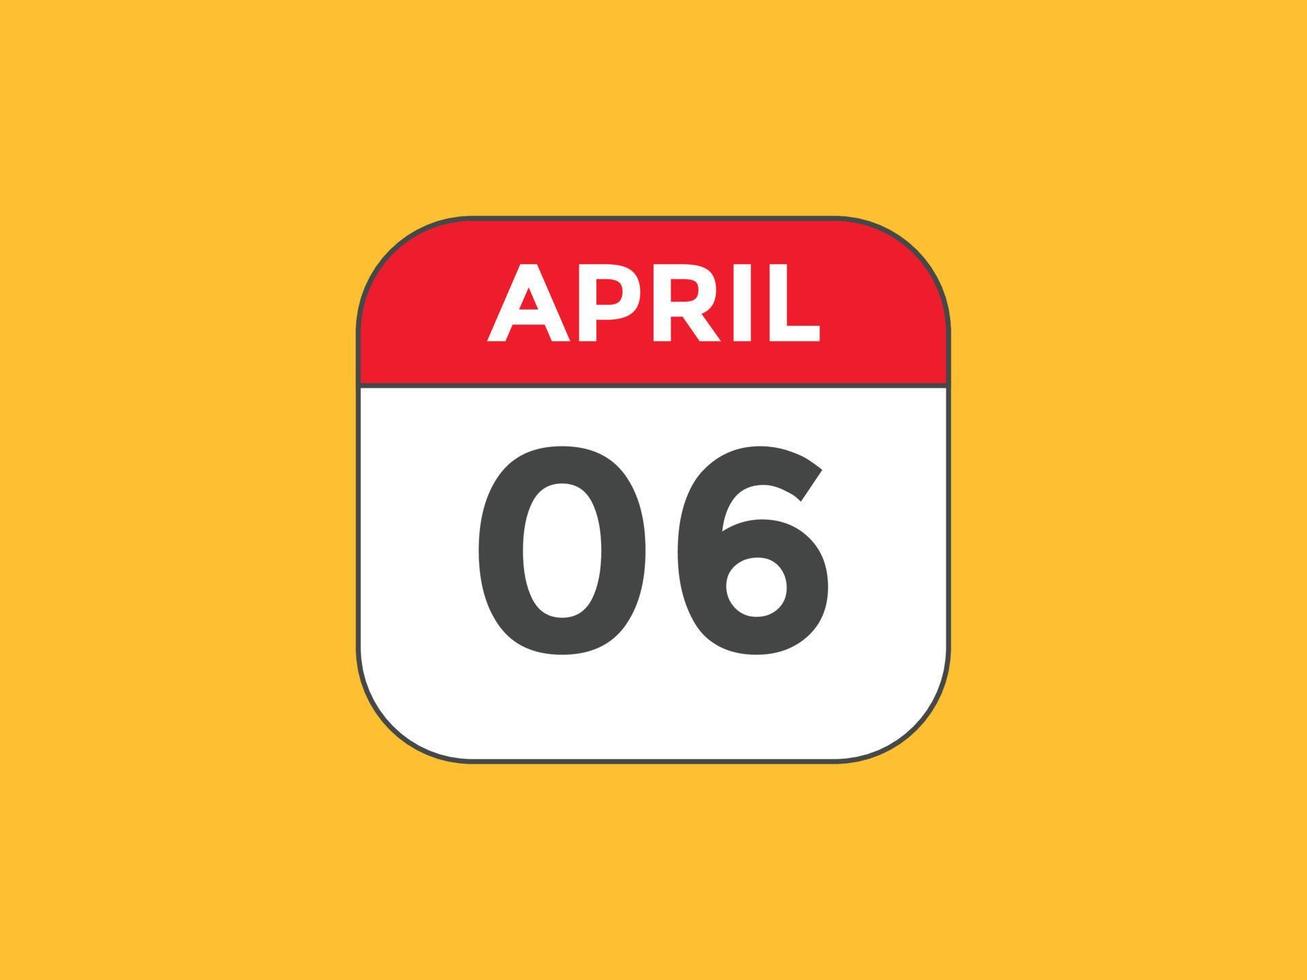 april 6 kalender påminnelse. 6:e april dagligen kalender ikon mall. kalender 6:e april ikon design mall. vektor illustration